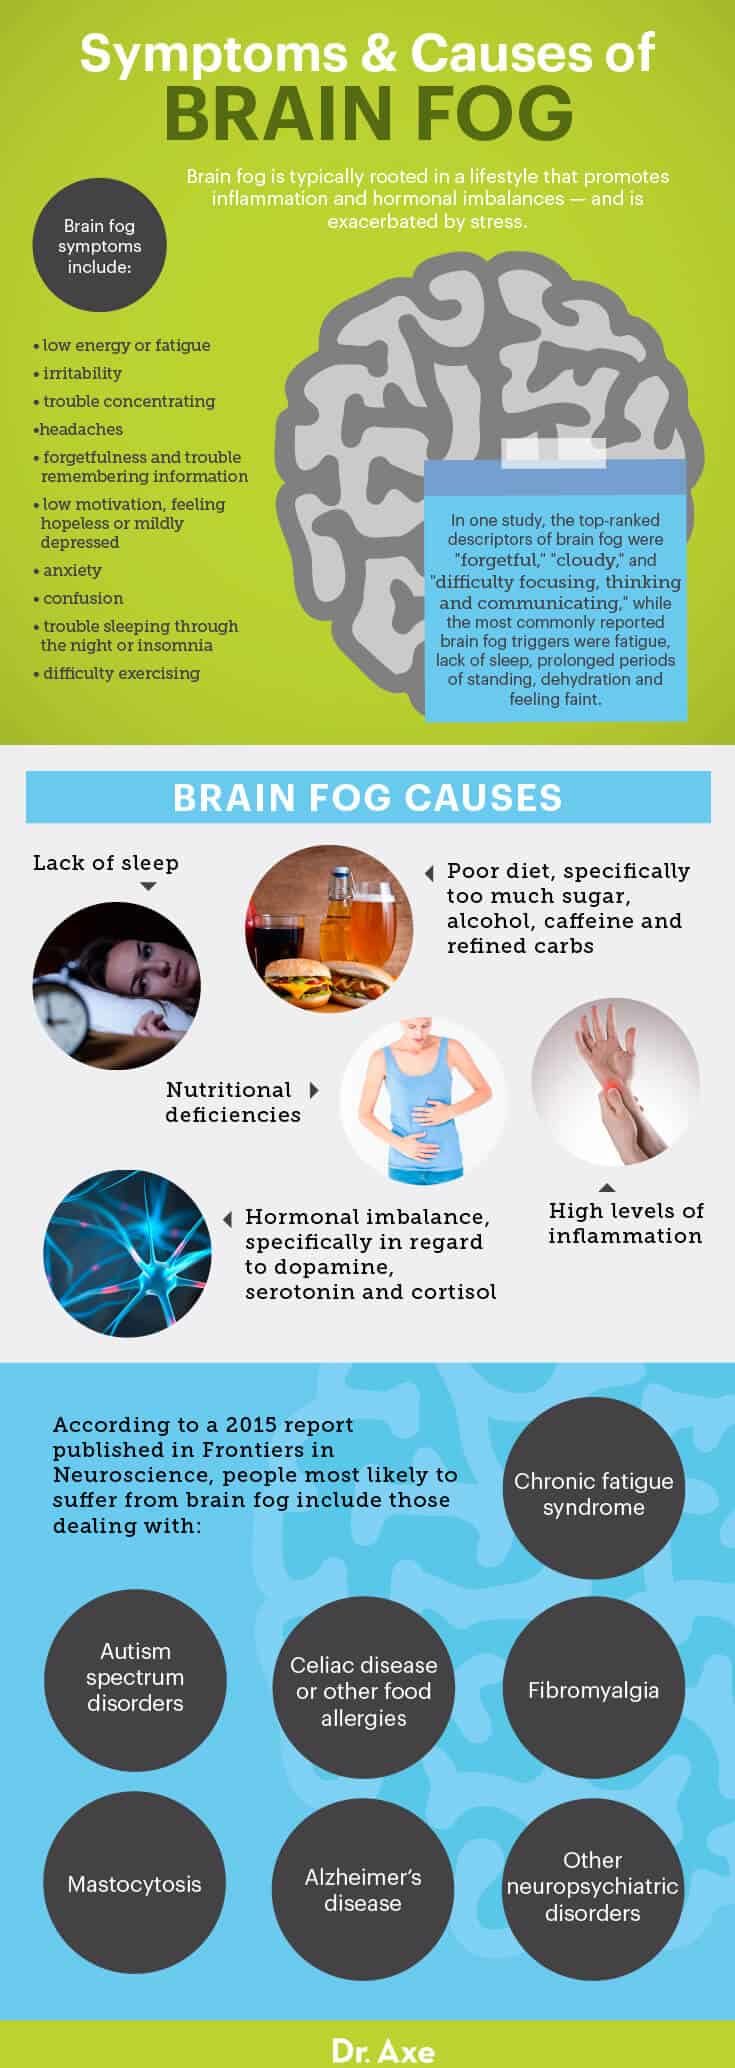 Brain fog symptoms & causes - Dr. Axe